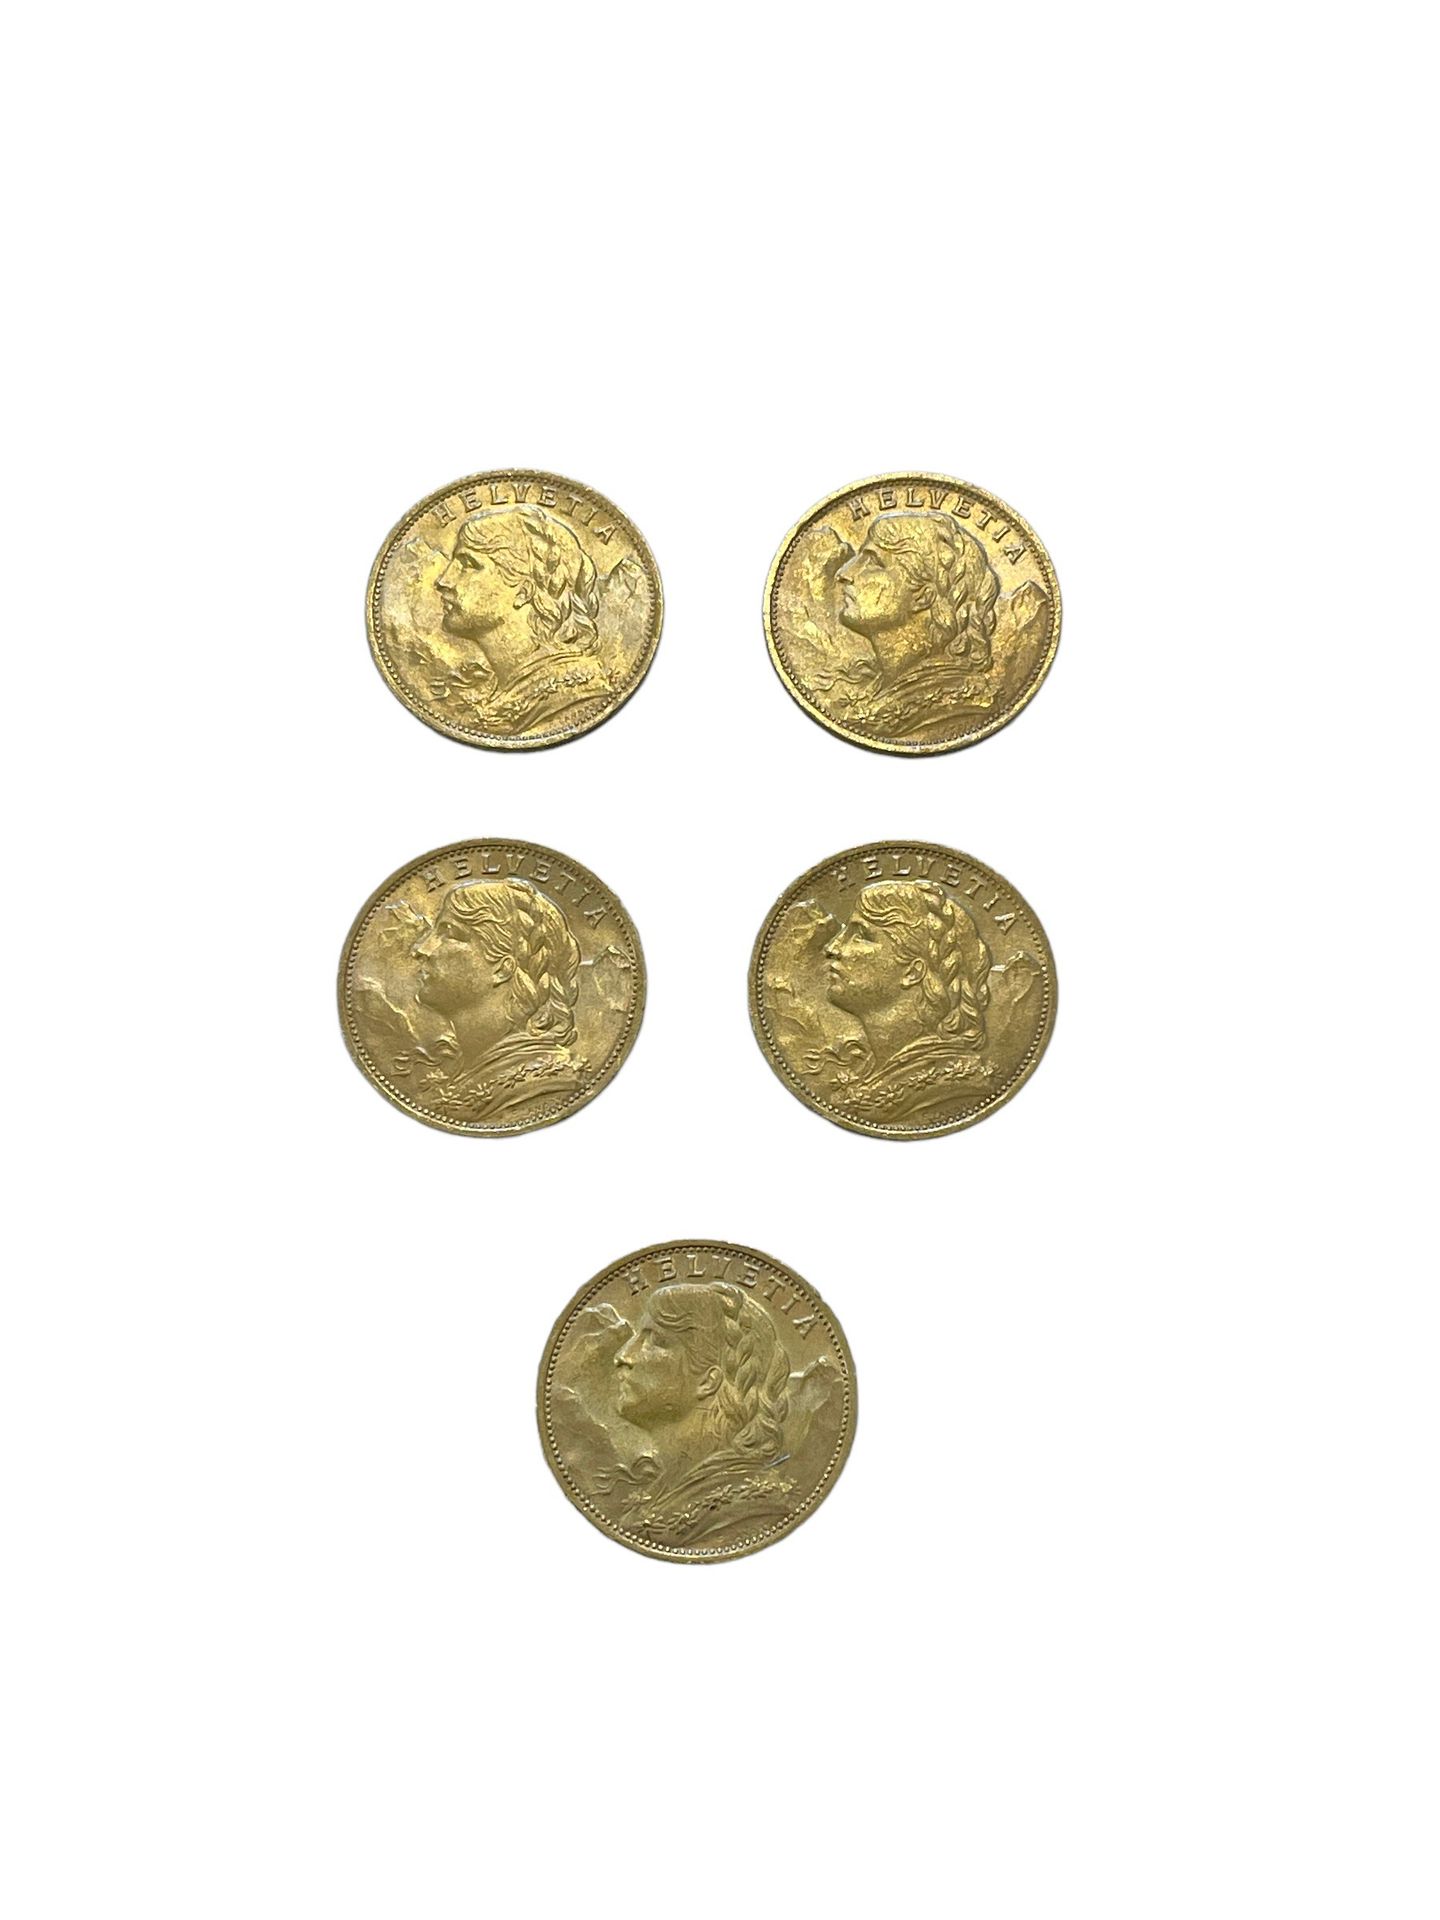 Null SUIZA
5 monedas de 20 francos oro
Peso : 32,2 g